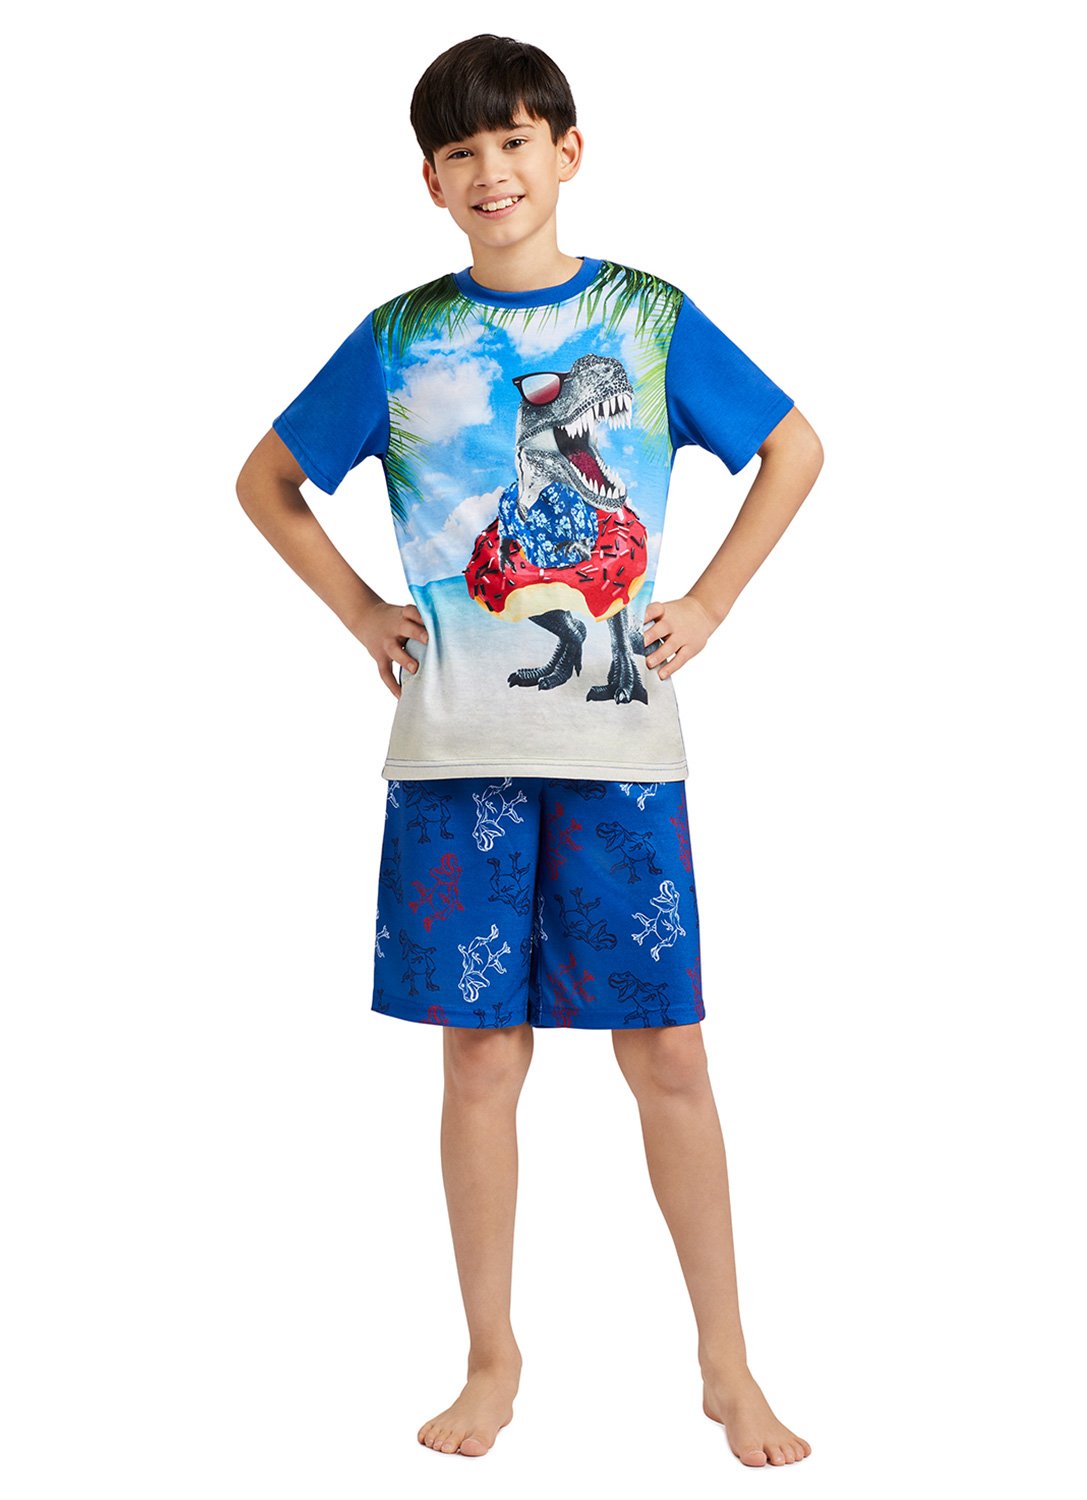 Boy with Print T-Shirt Dino wearing donut & Dino print Shorts